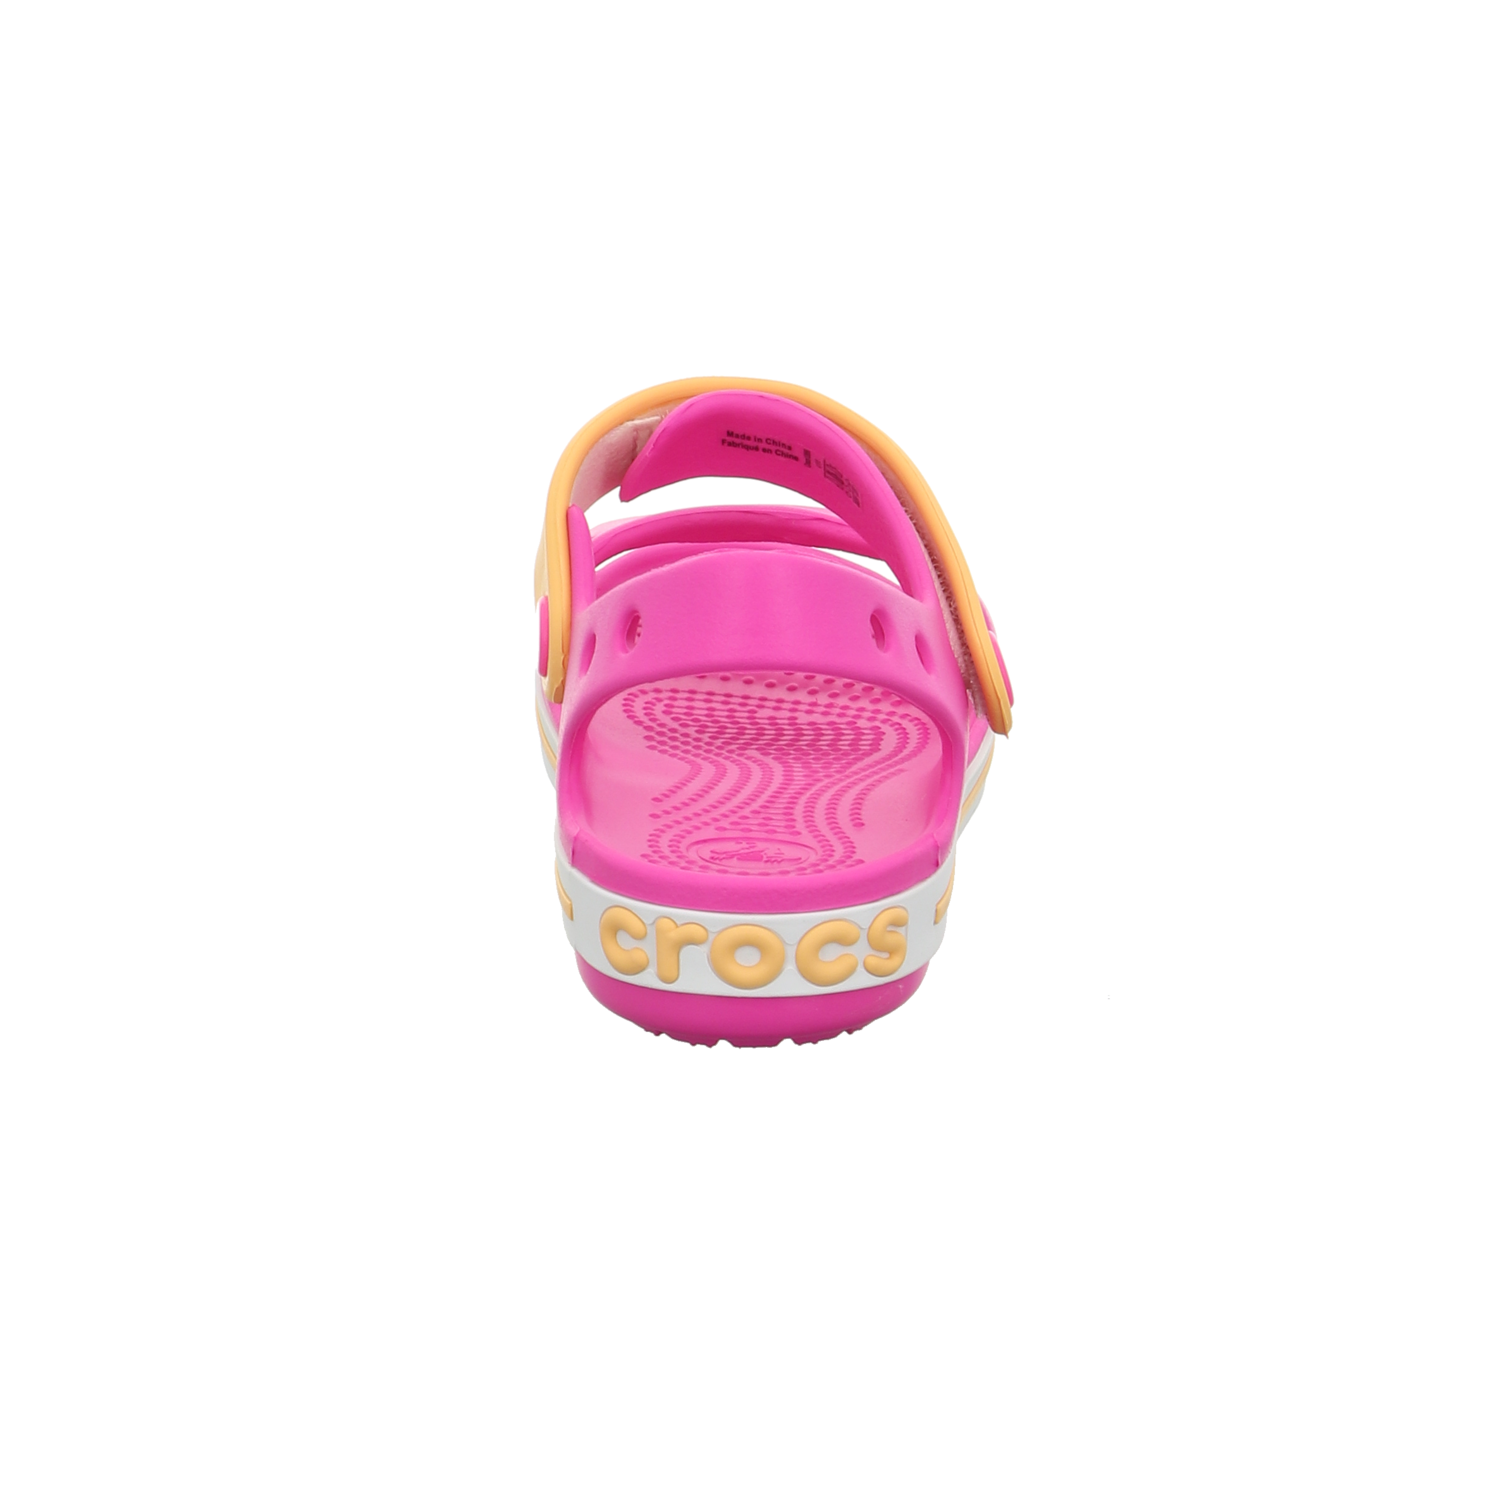 Crocs Casual-Sandalette pink / fuchsia